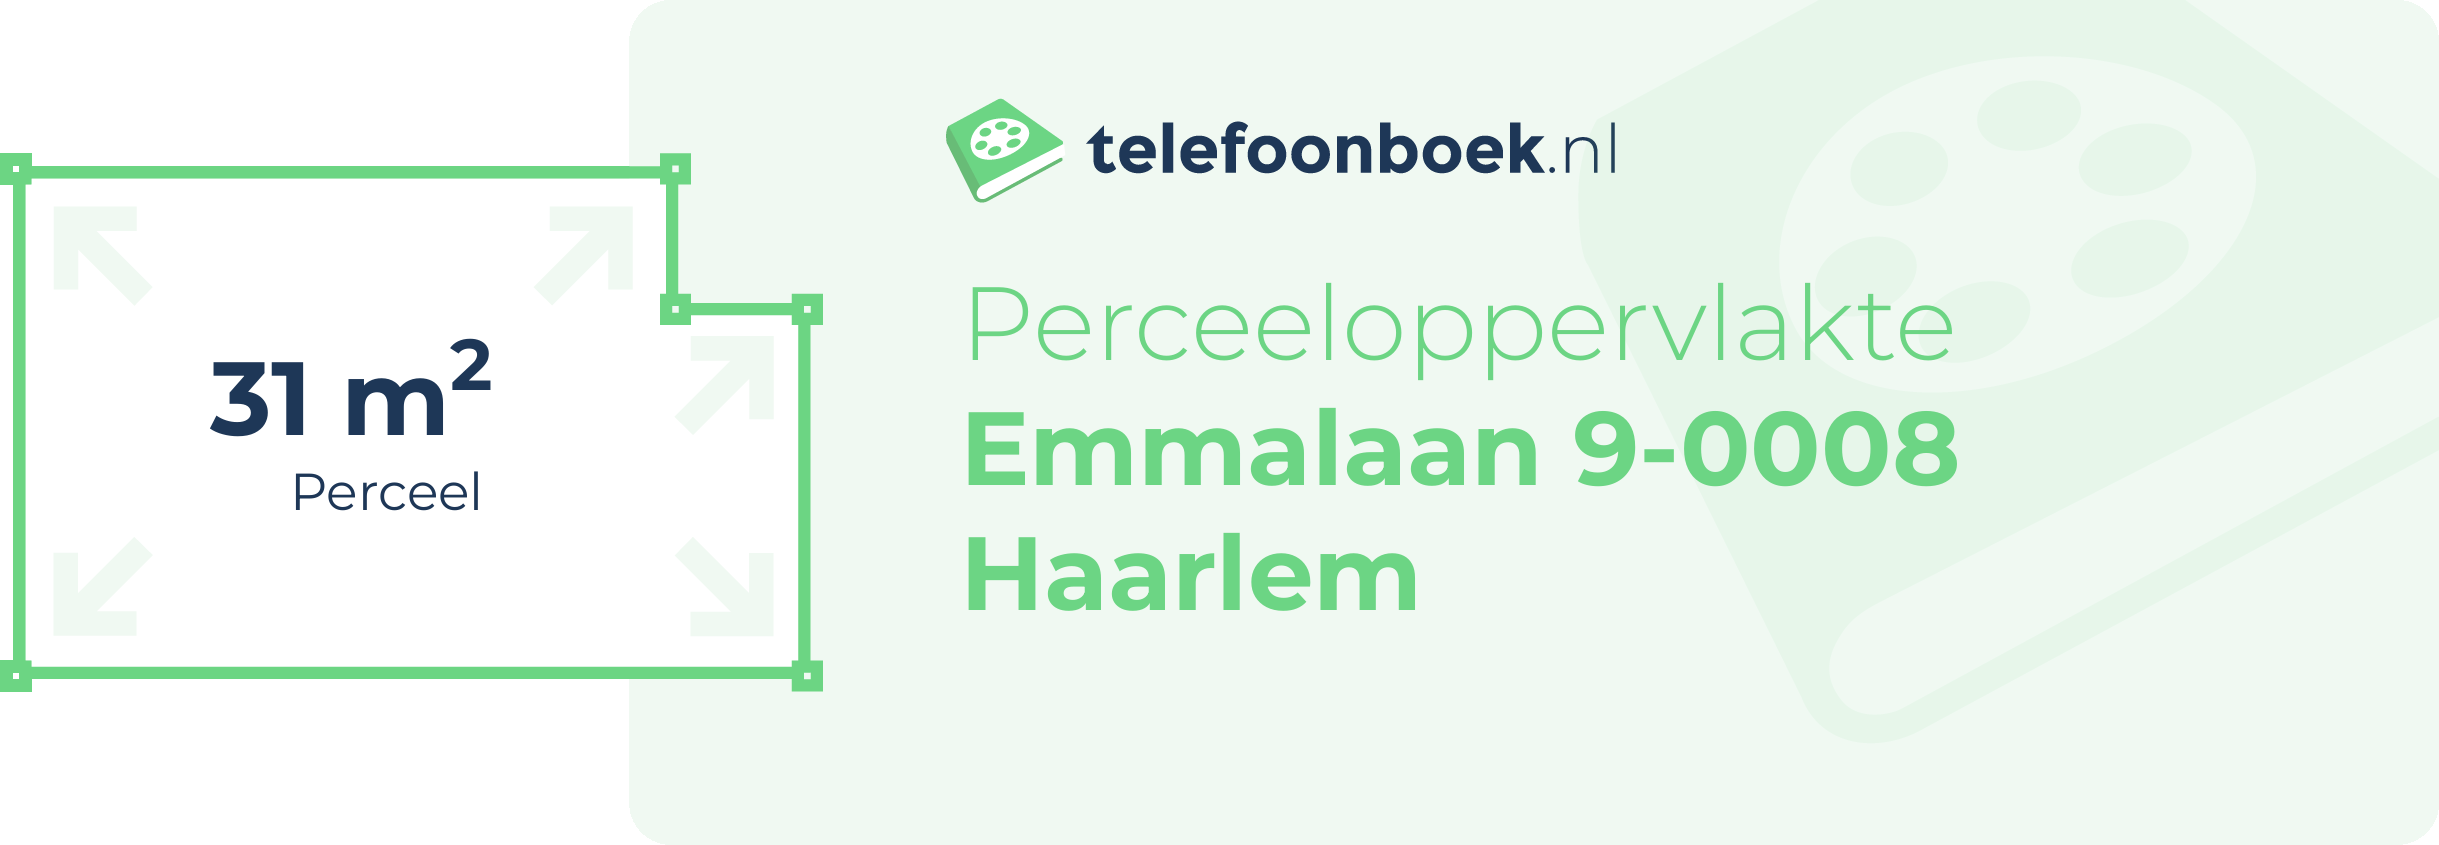 Perceeloppervlakte Emmalaan 9-0008 Haarlem